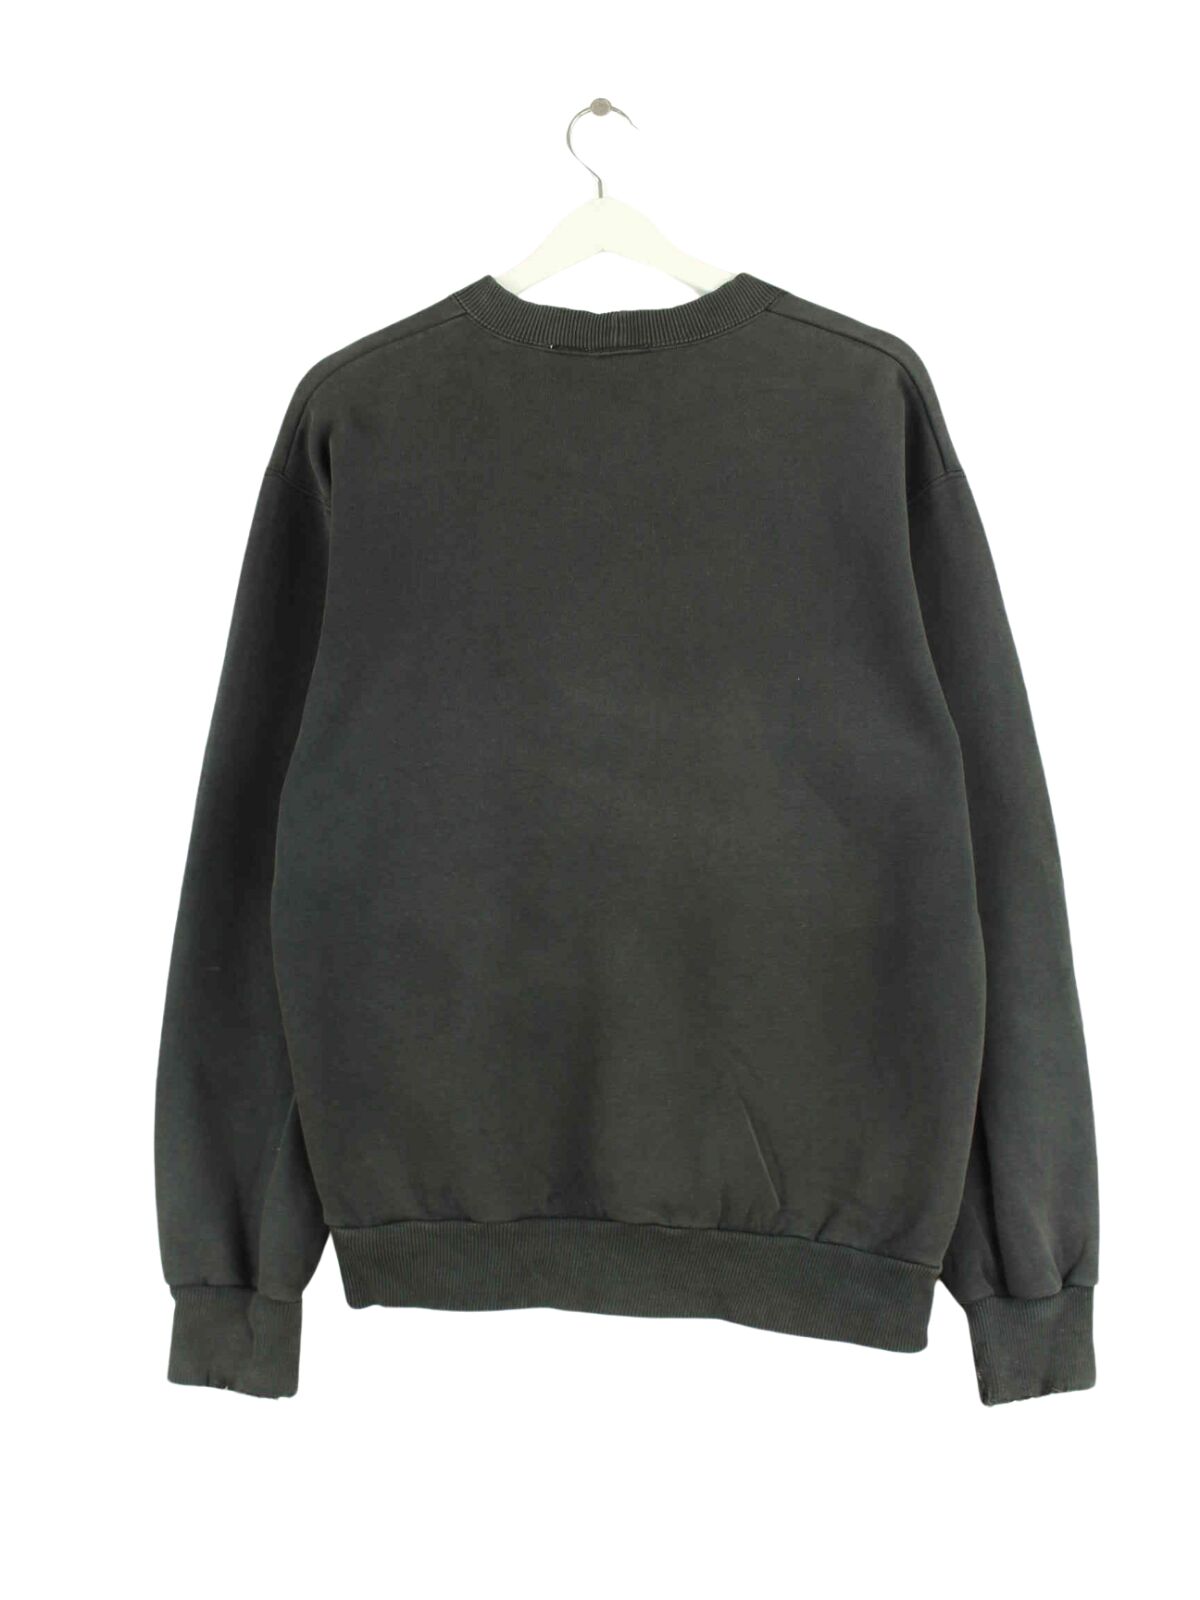 Nike 1993 Vintage Silver Tag Sweater Grau S (back image)